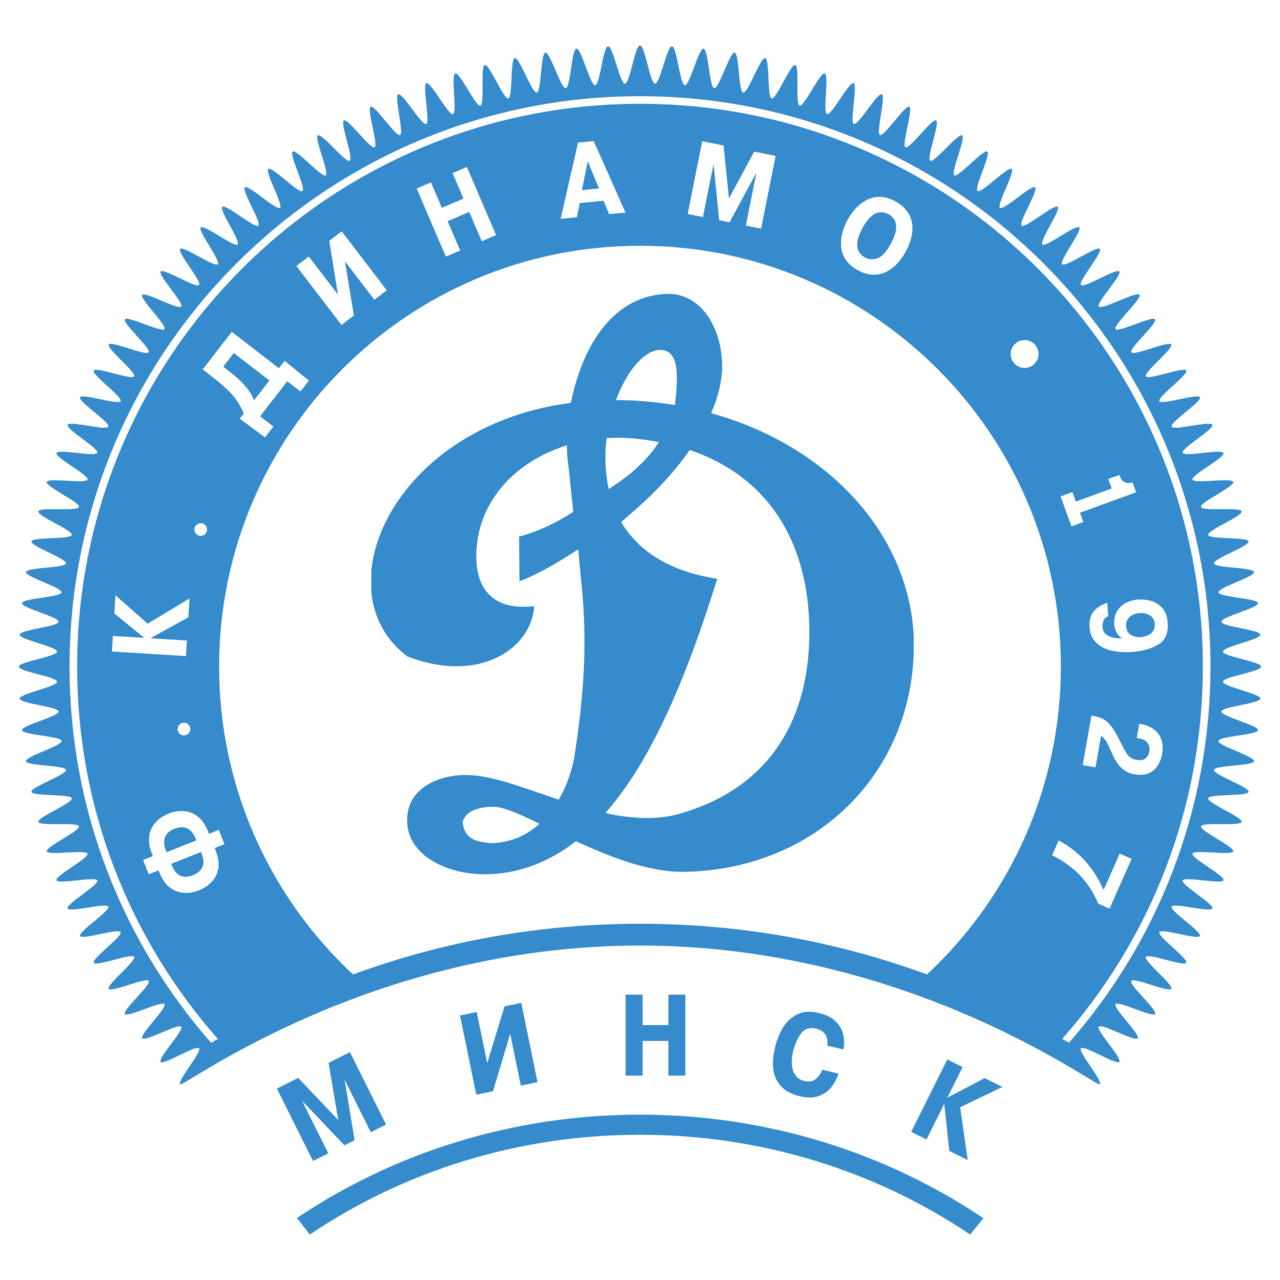 Dinamo Minsk (R)